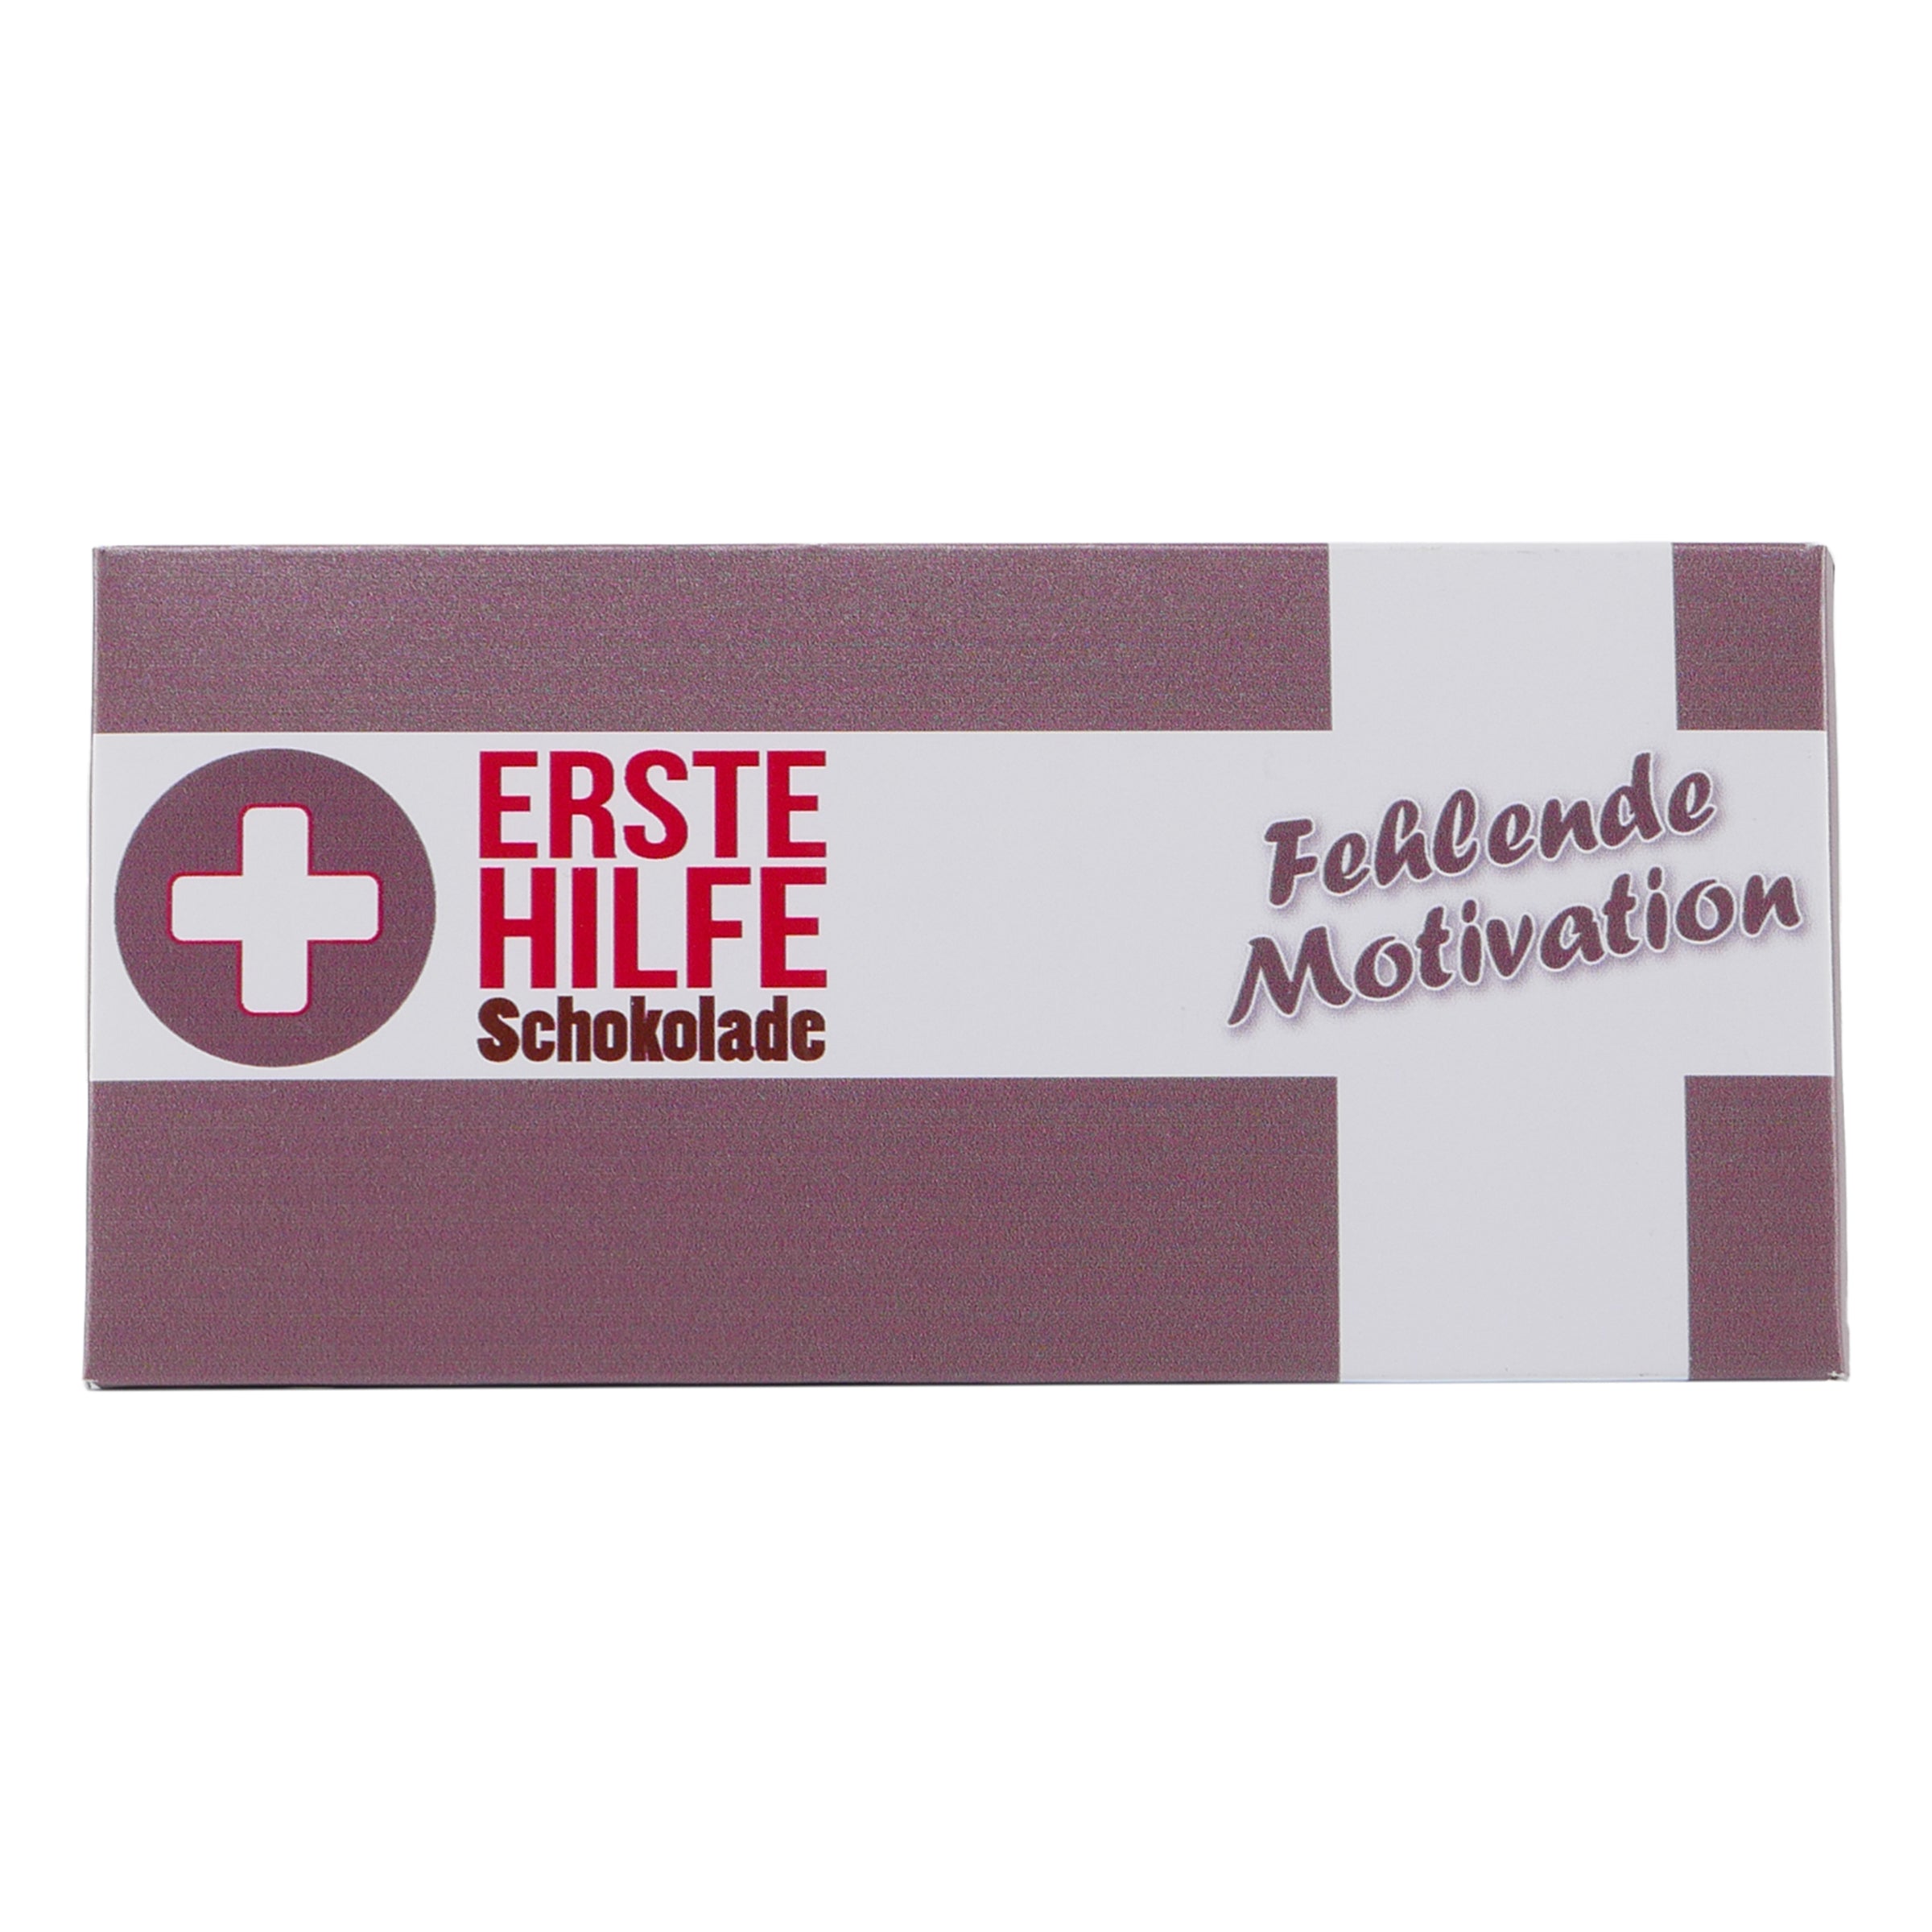 Erste Hilfe Schokolade "Fehlende Motivation"